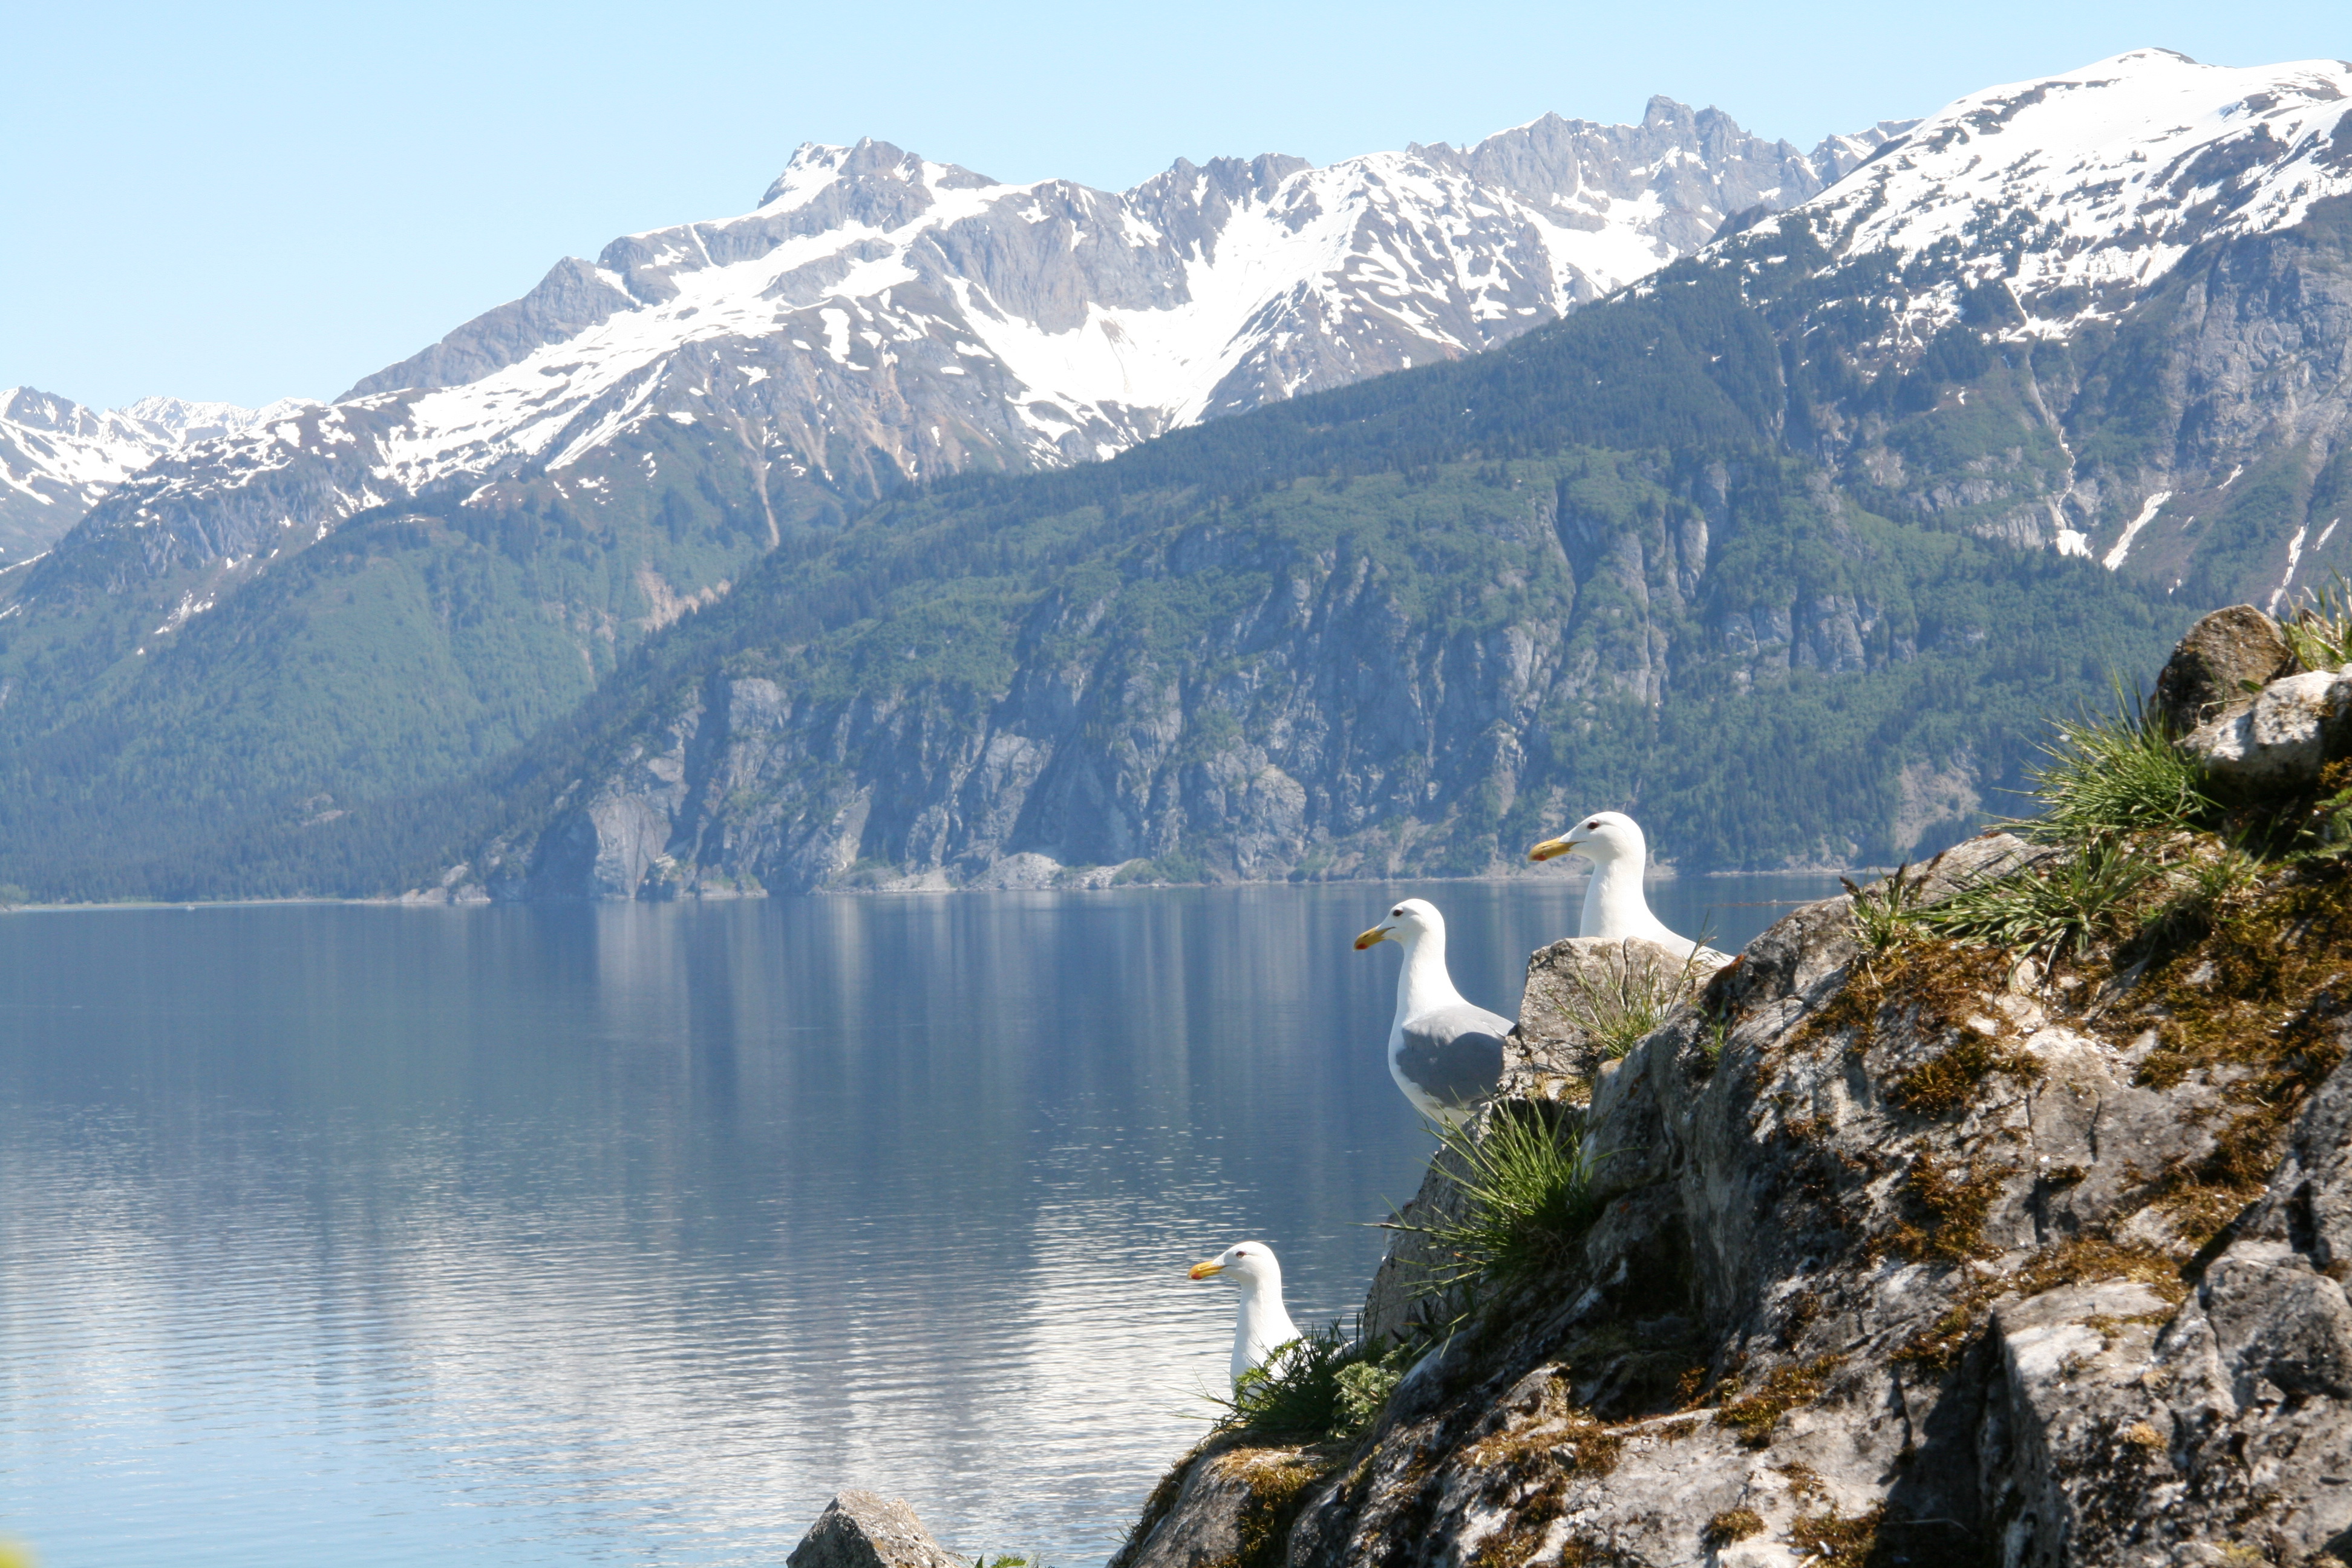 Gulls perched on a rocky island